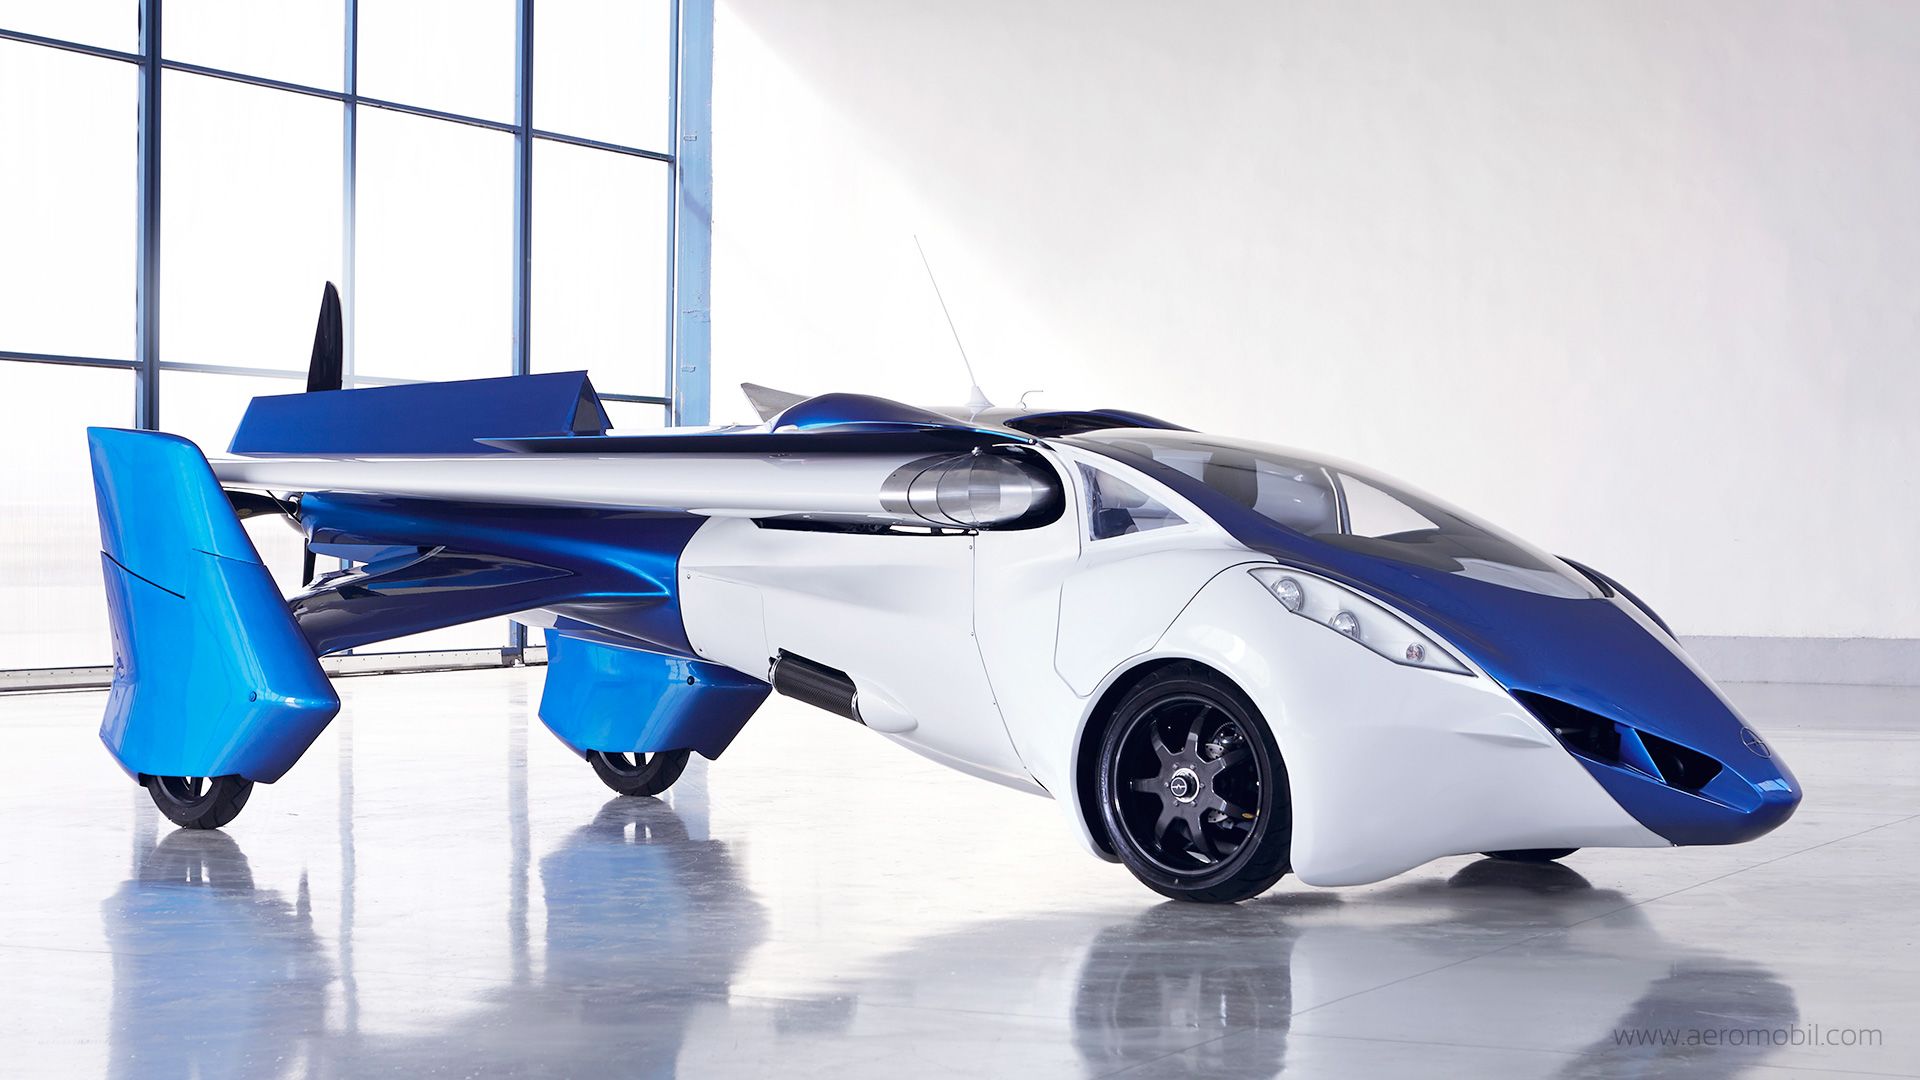 prototype flying car